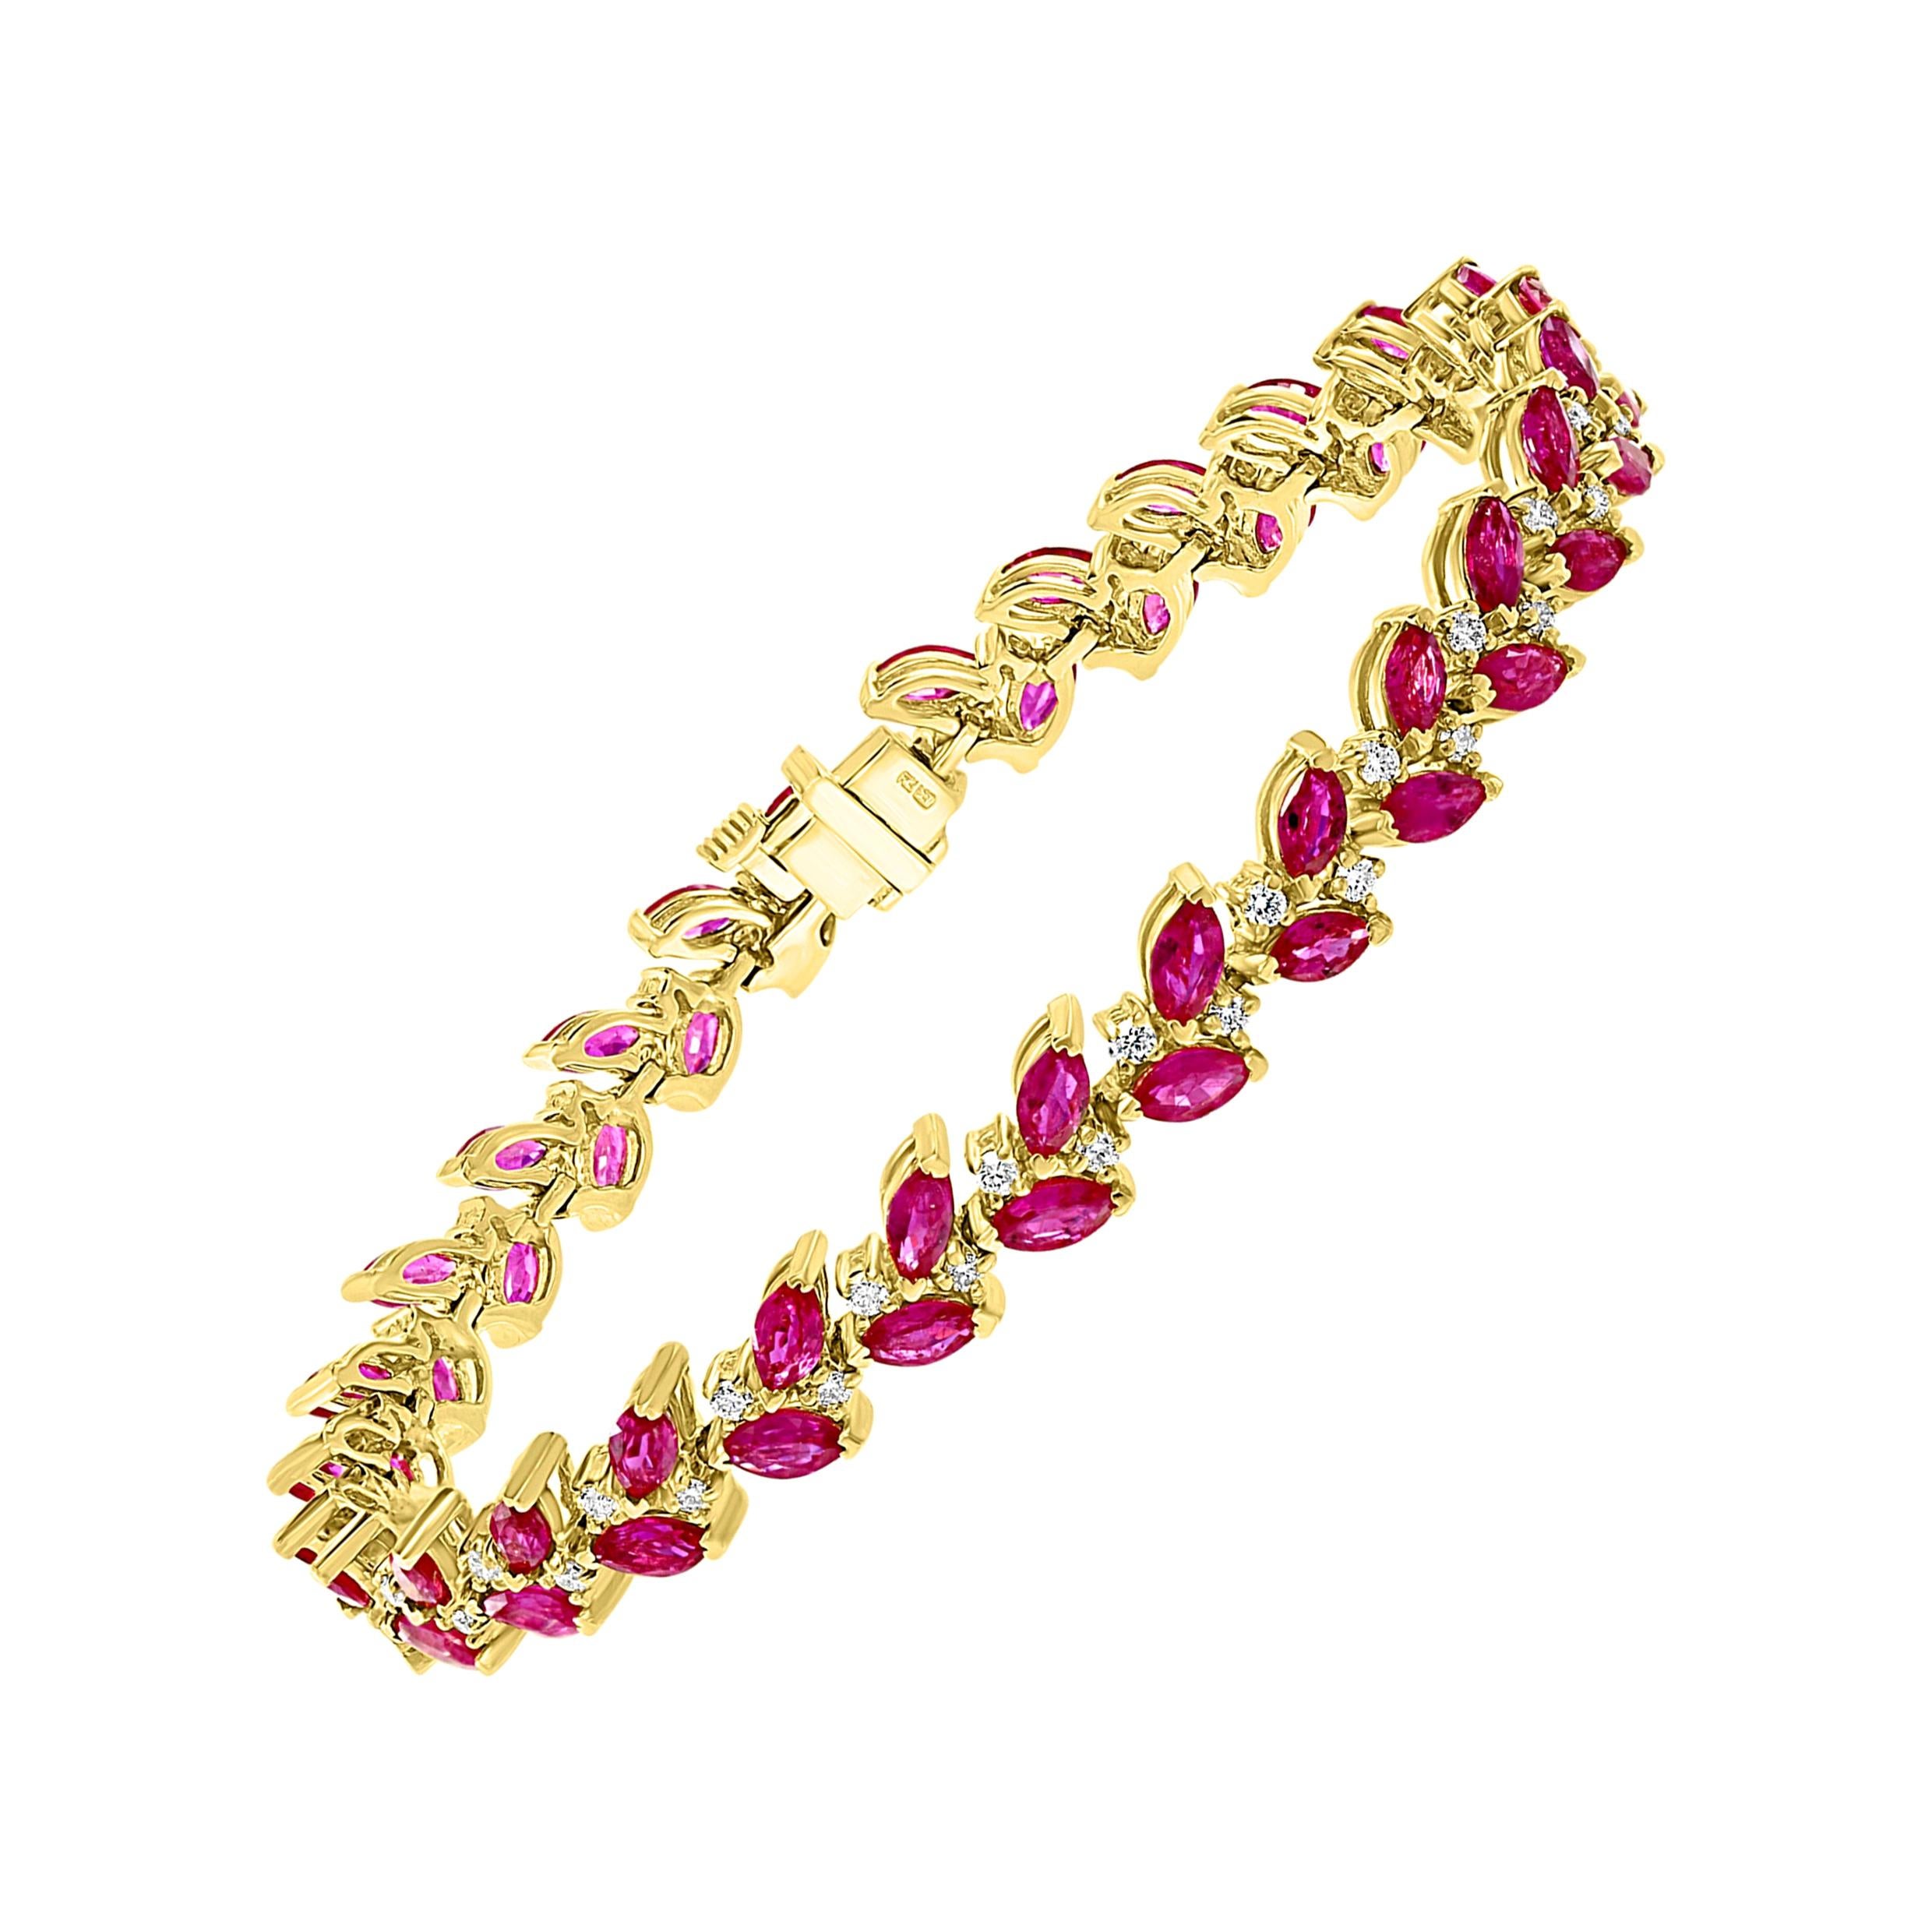 12 Carat Natural Marquise Ruby and Diamond Tennis Bracelet 14 Karat Yellow Gold